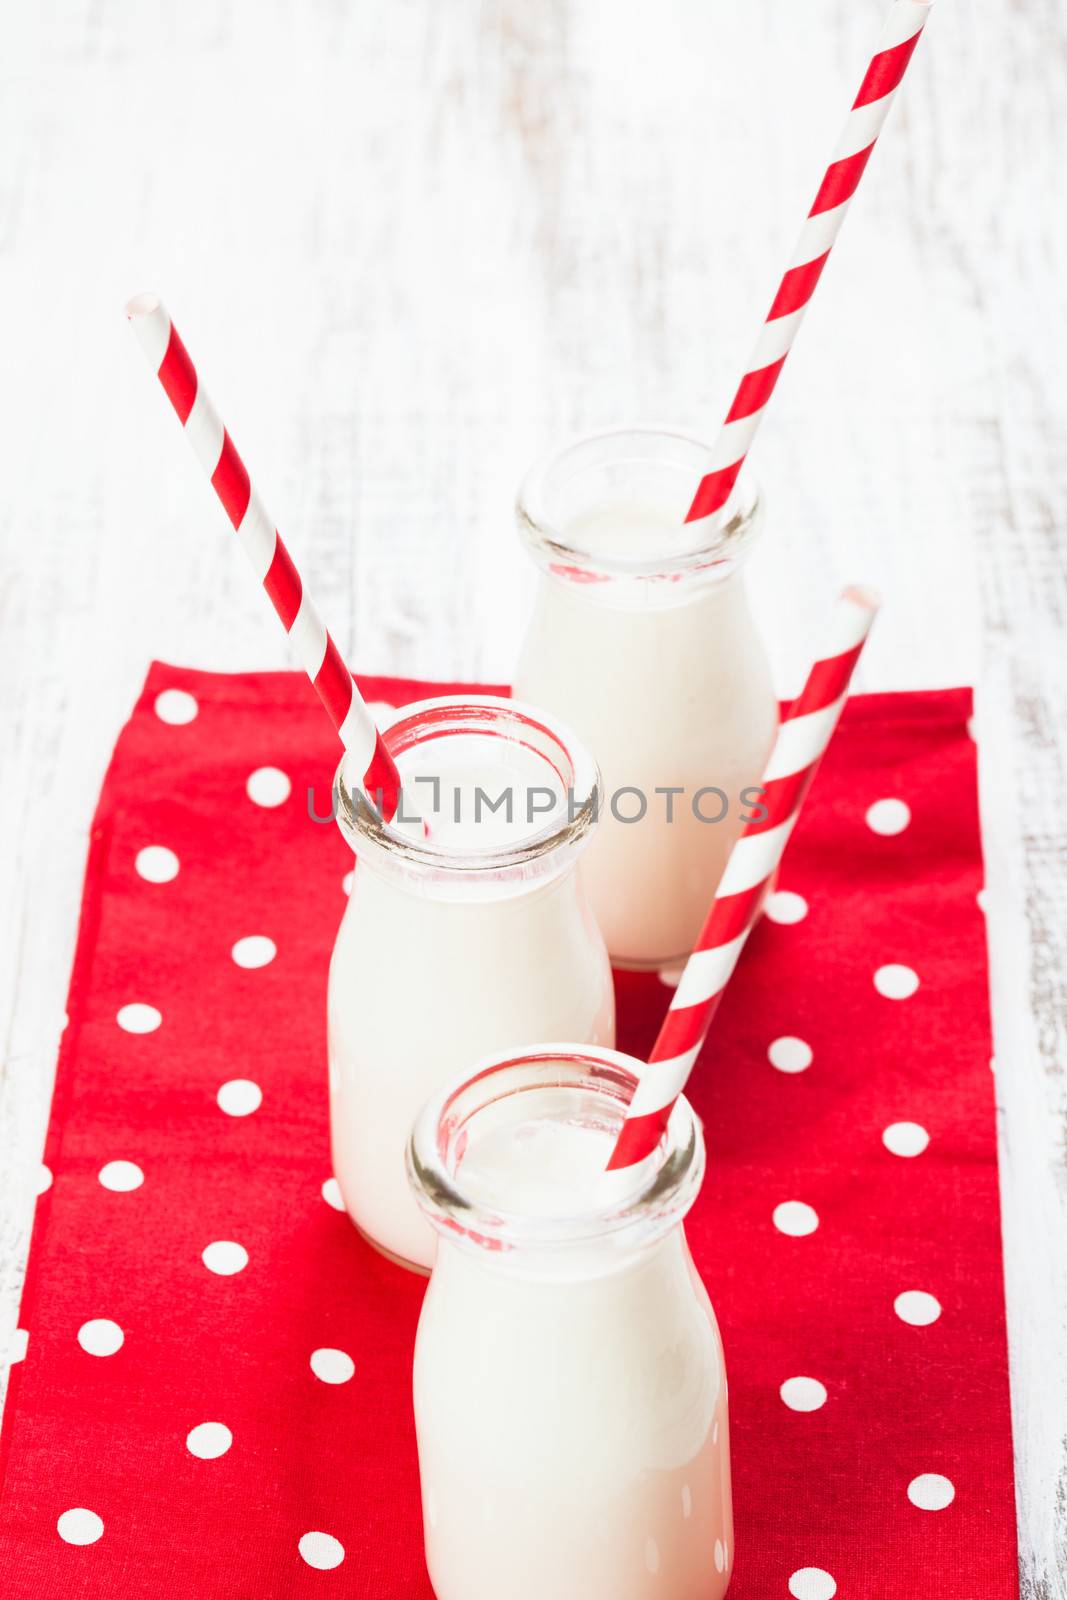 Milk in bottles with paper straws for children on the red polka dot napkin